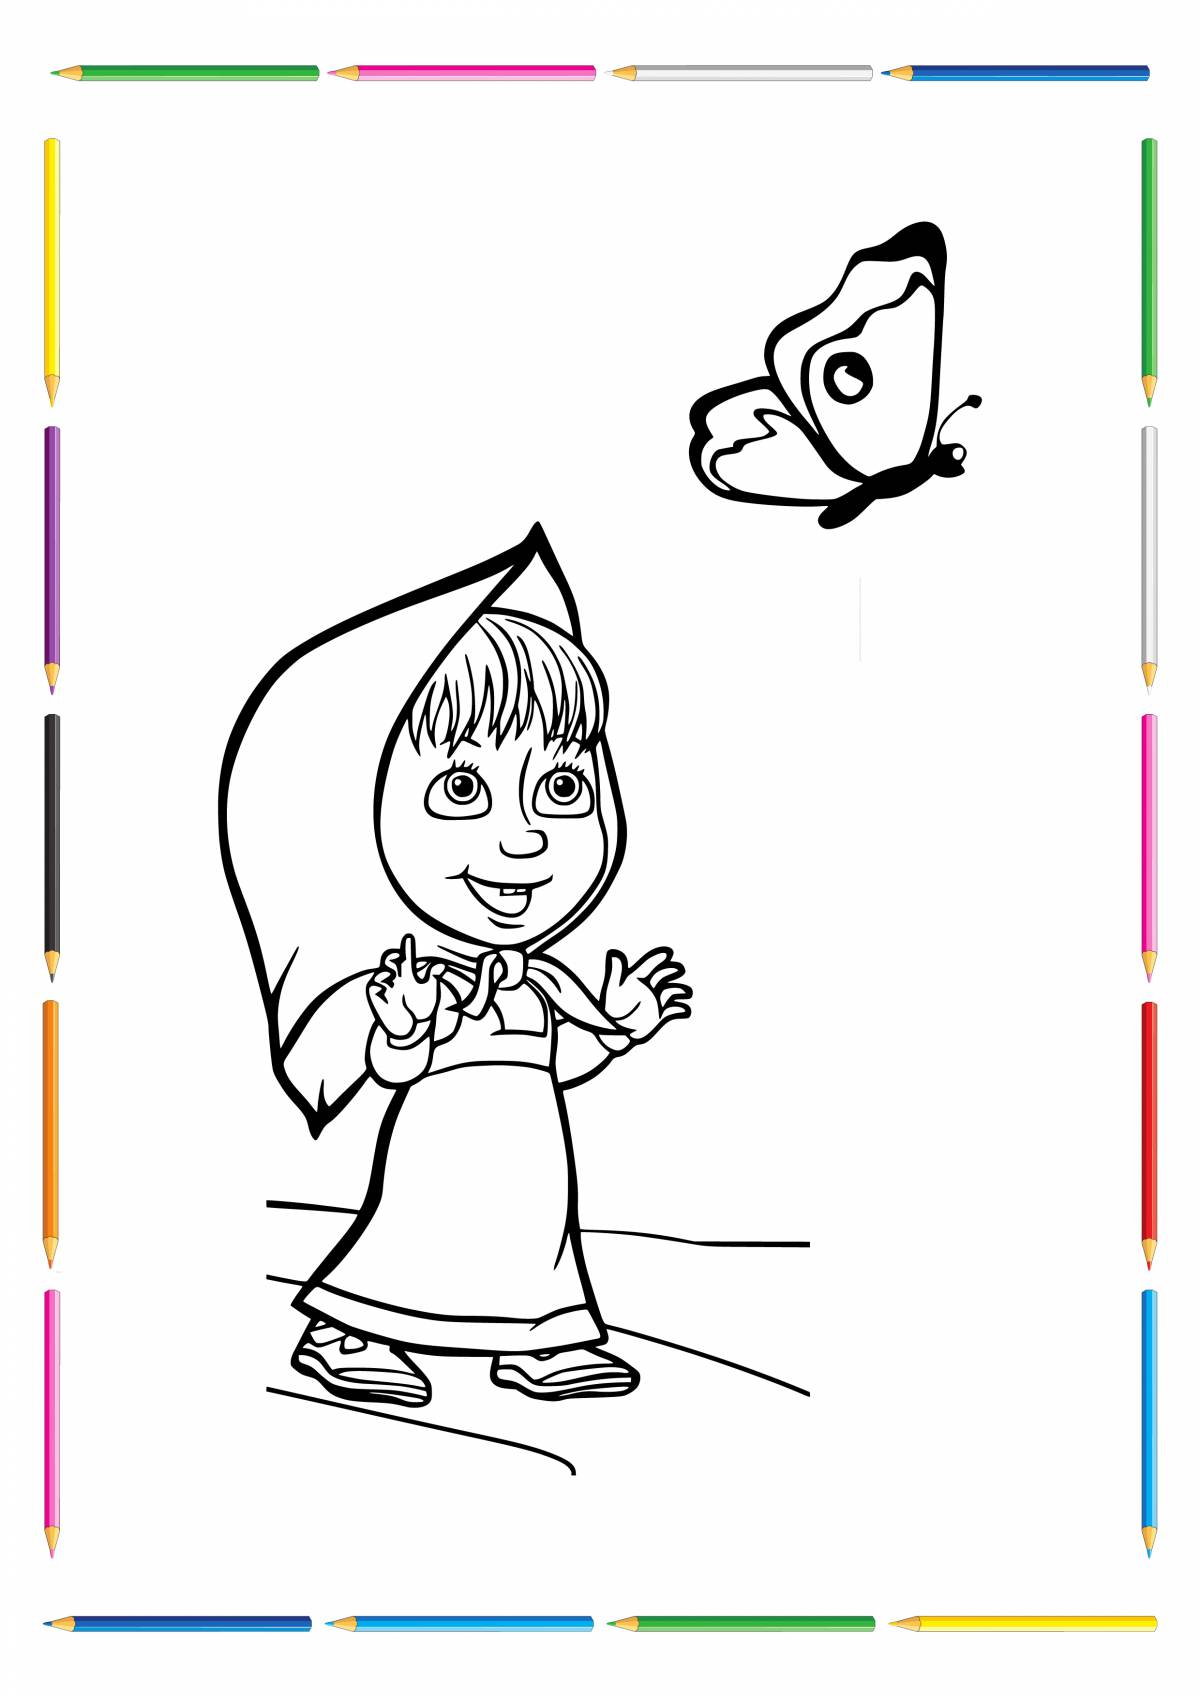 Playful Masha and Vitya coloring